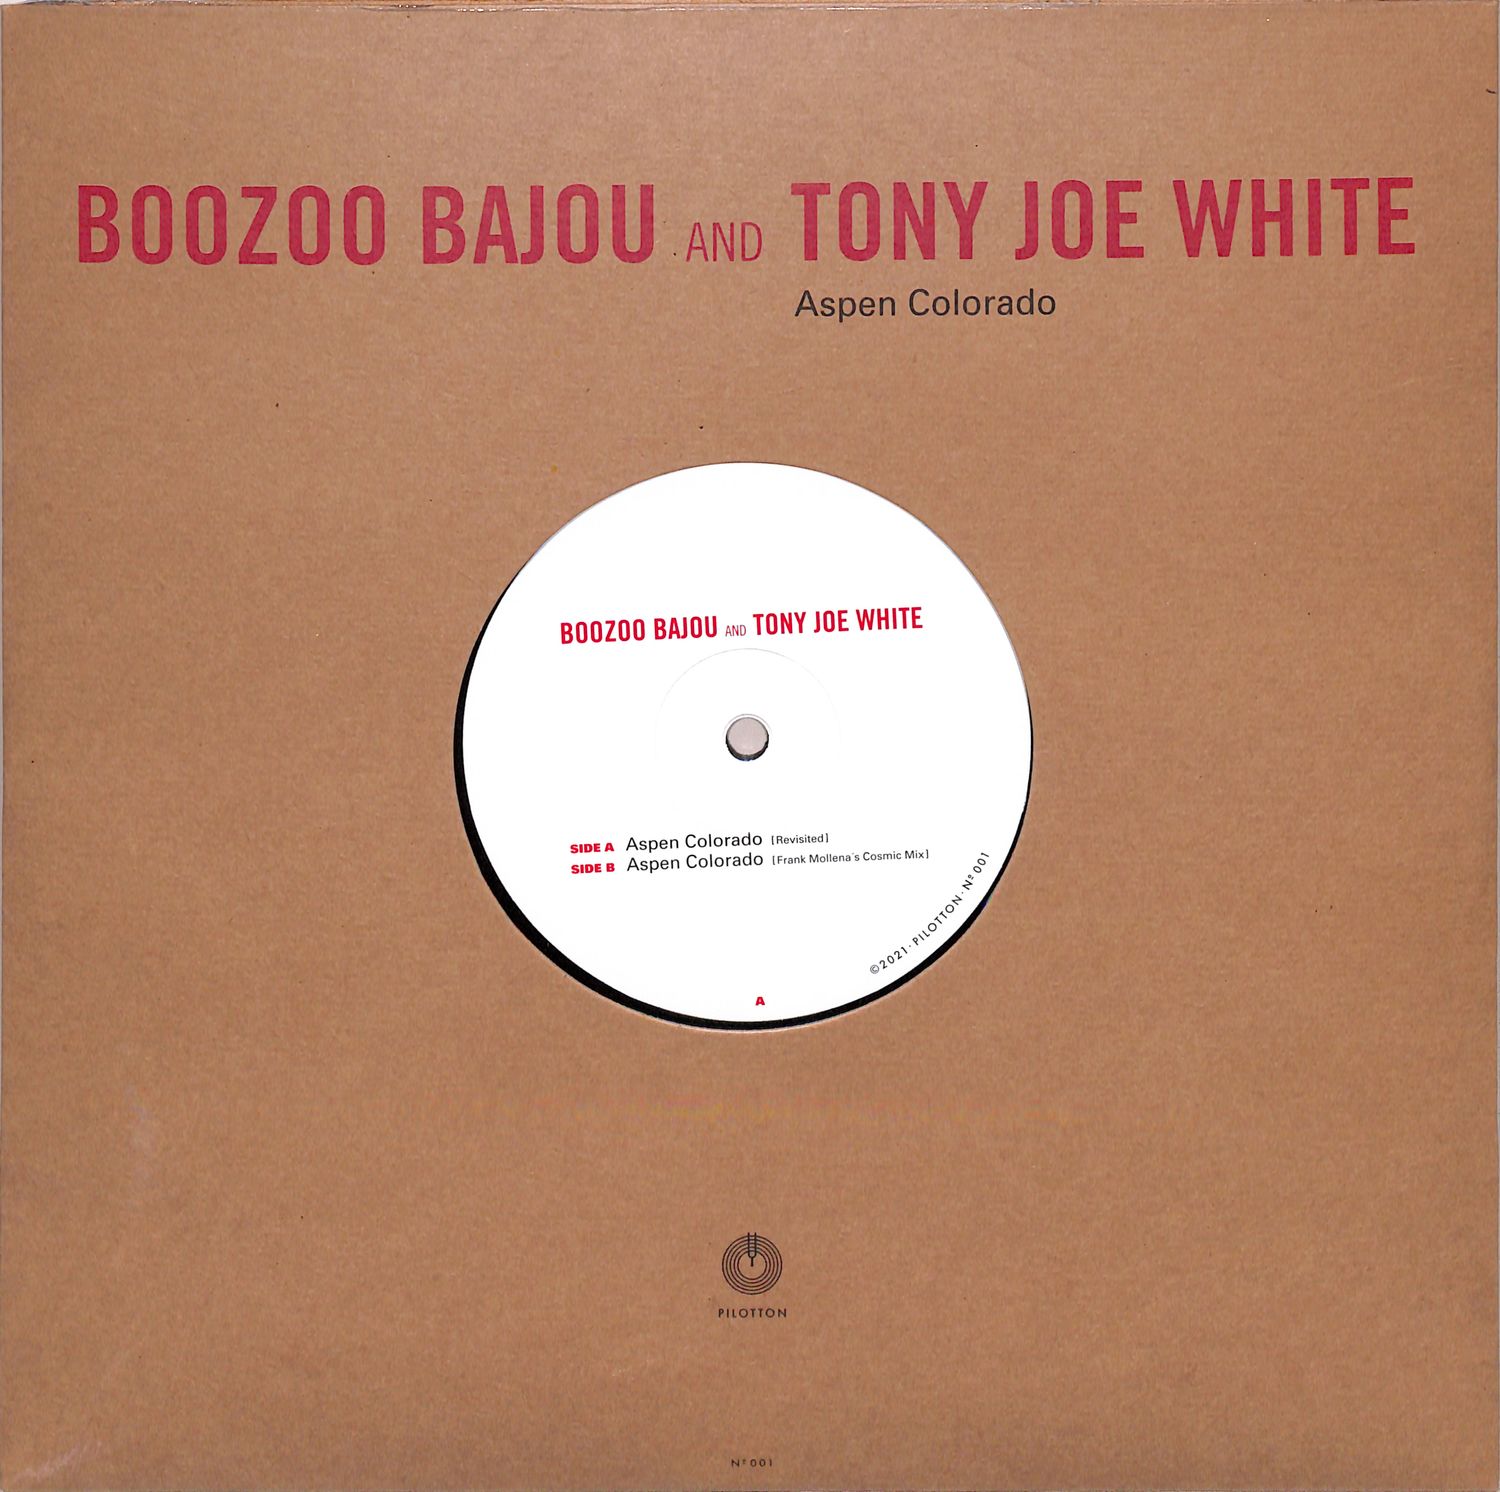 Boozoo Bajou and Tony Joe White - ASPEN COLORADO 